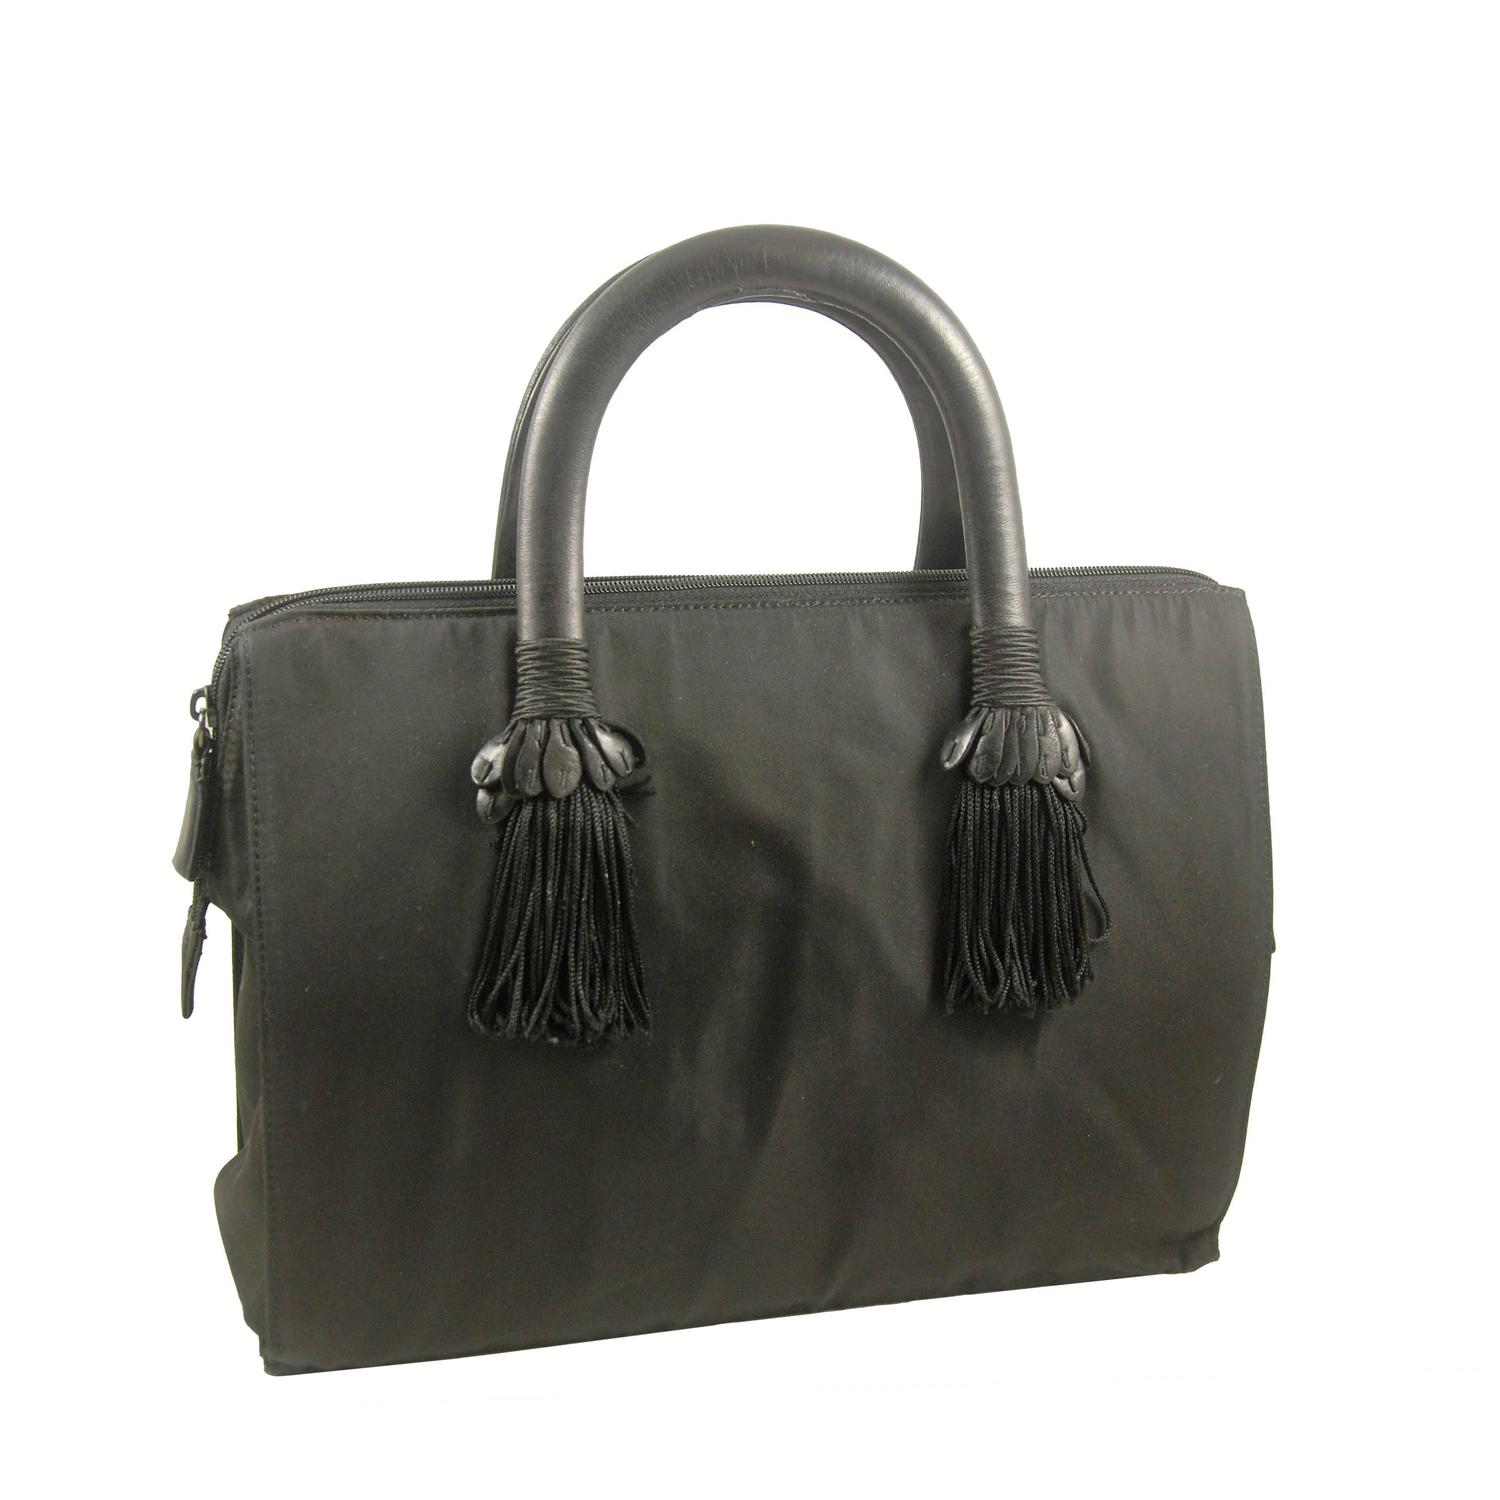 Vintage Black Nylon Prada Speedy Bag with Fringes For Sale at 1stdibs  